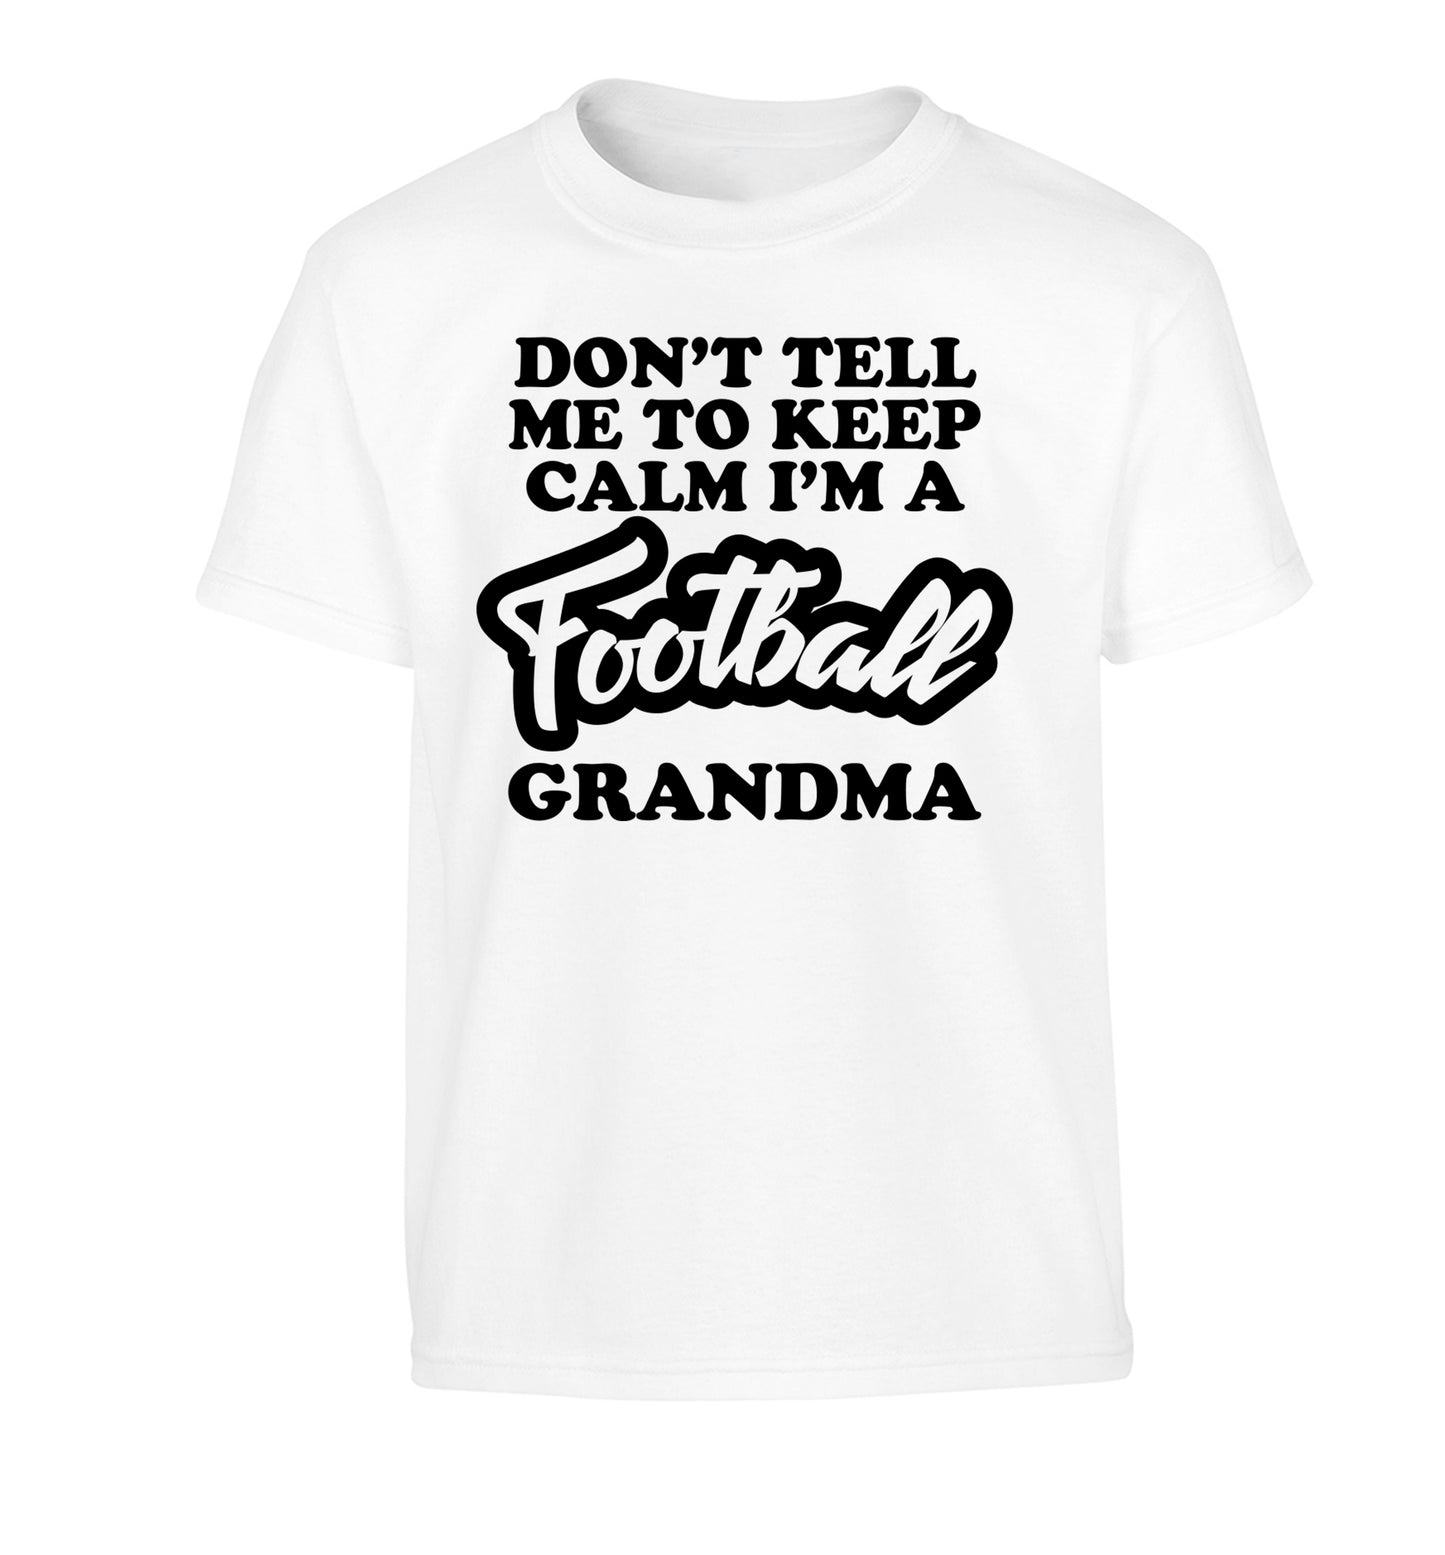 Don't tell me to keep calm I'm a football grandma Children's white Tshirt 12-14 Years